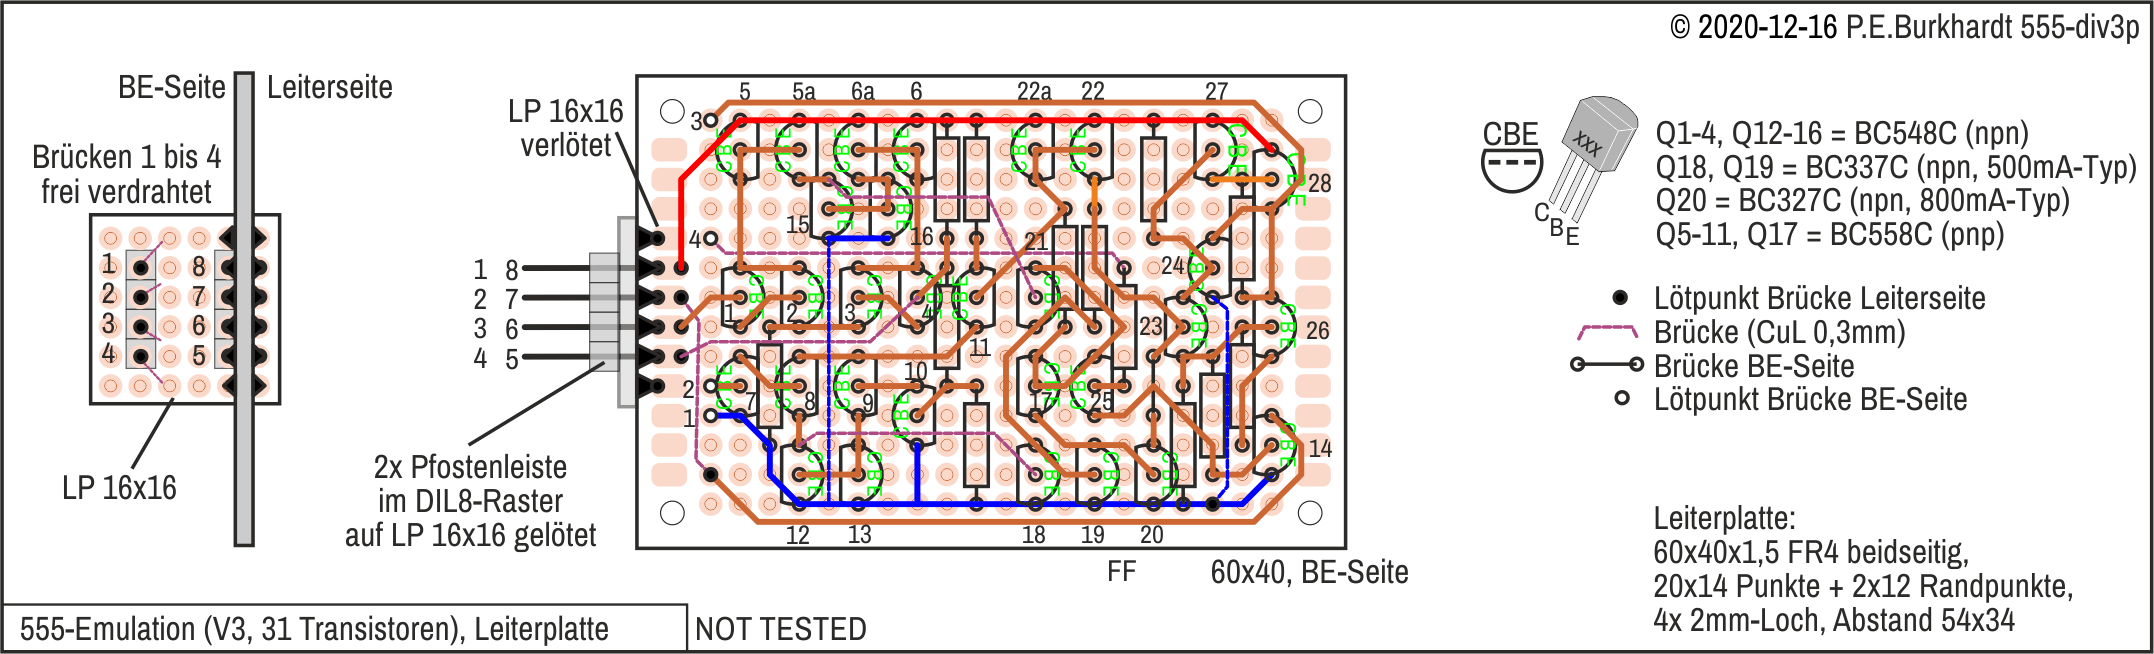 555-Emulation mit 31 Transistoren, PCB